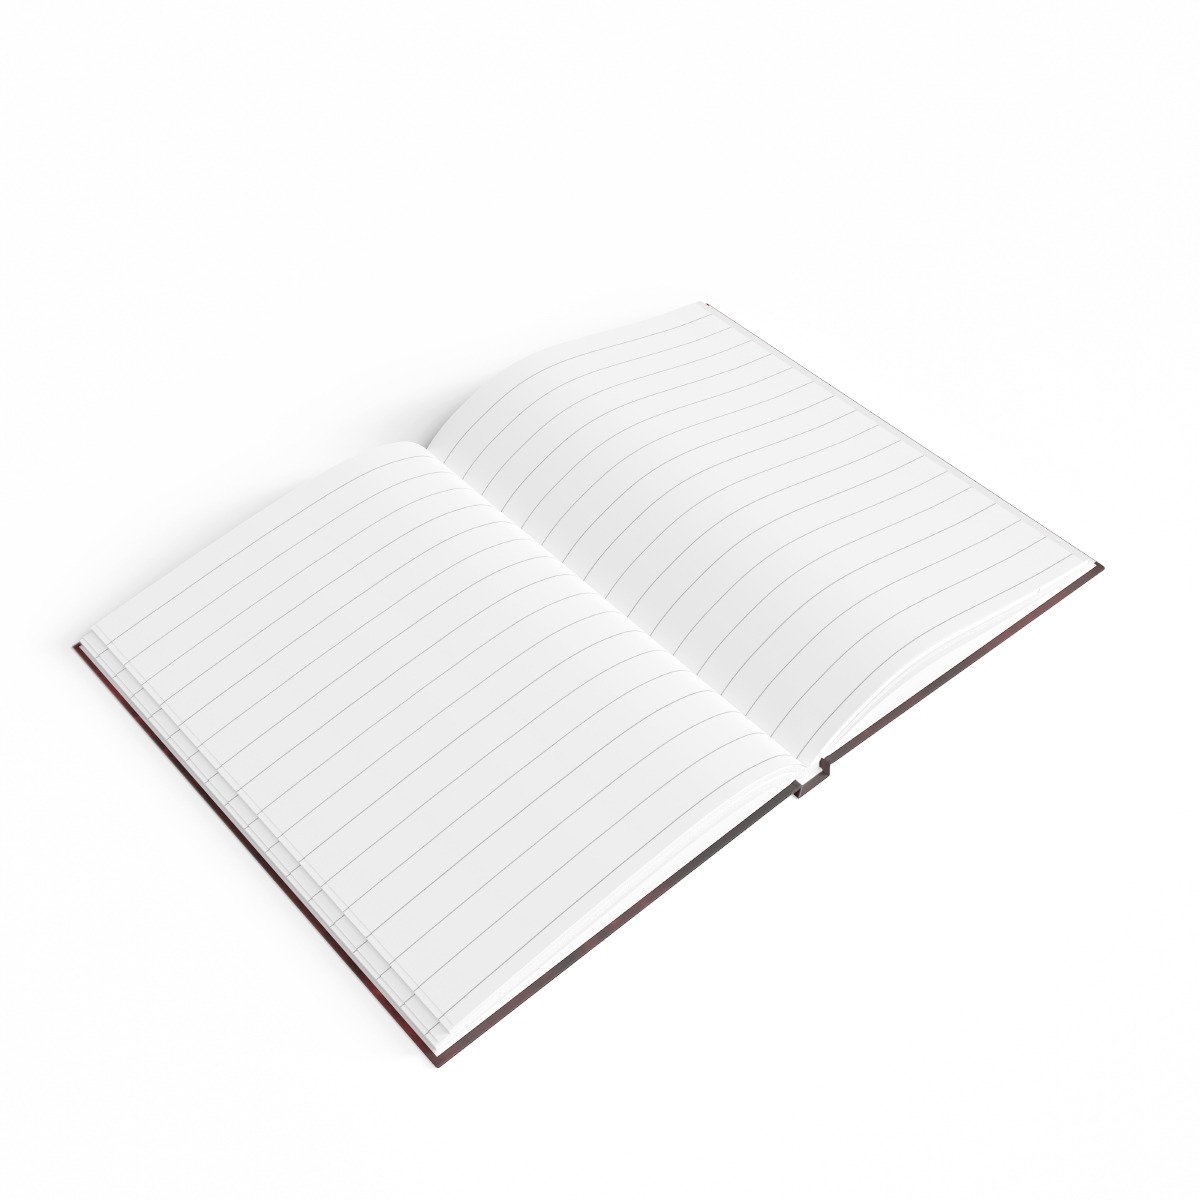 Red Valknut Ruled Line Hardcover Journal